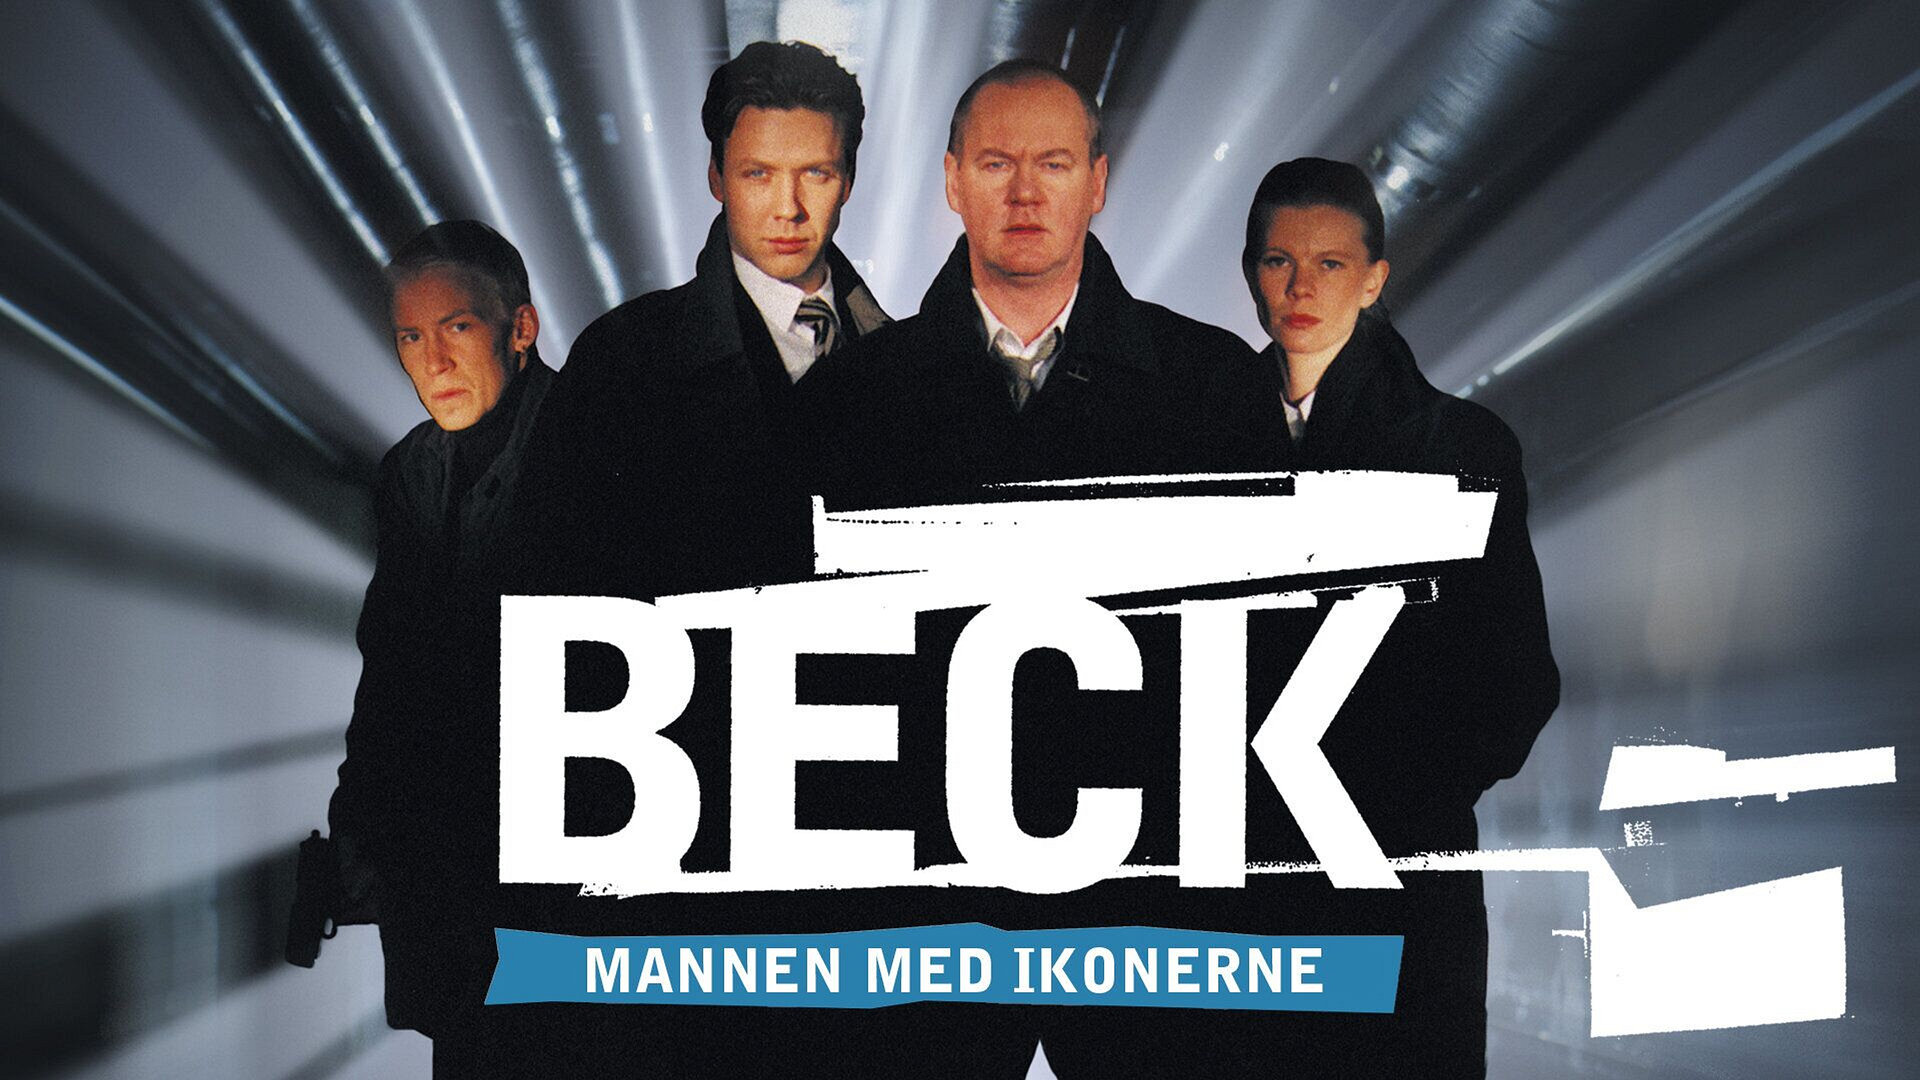 Beck - Mannen med ikonerna (2)